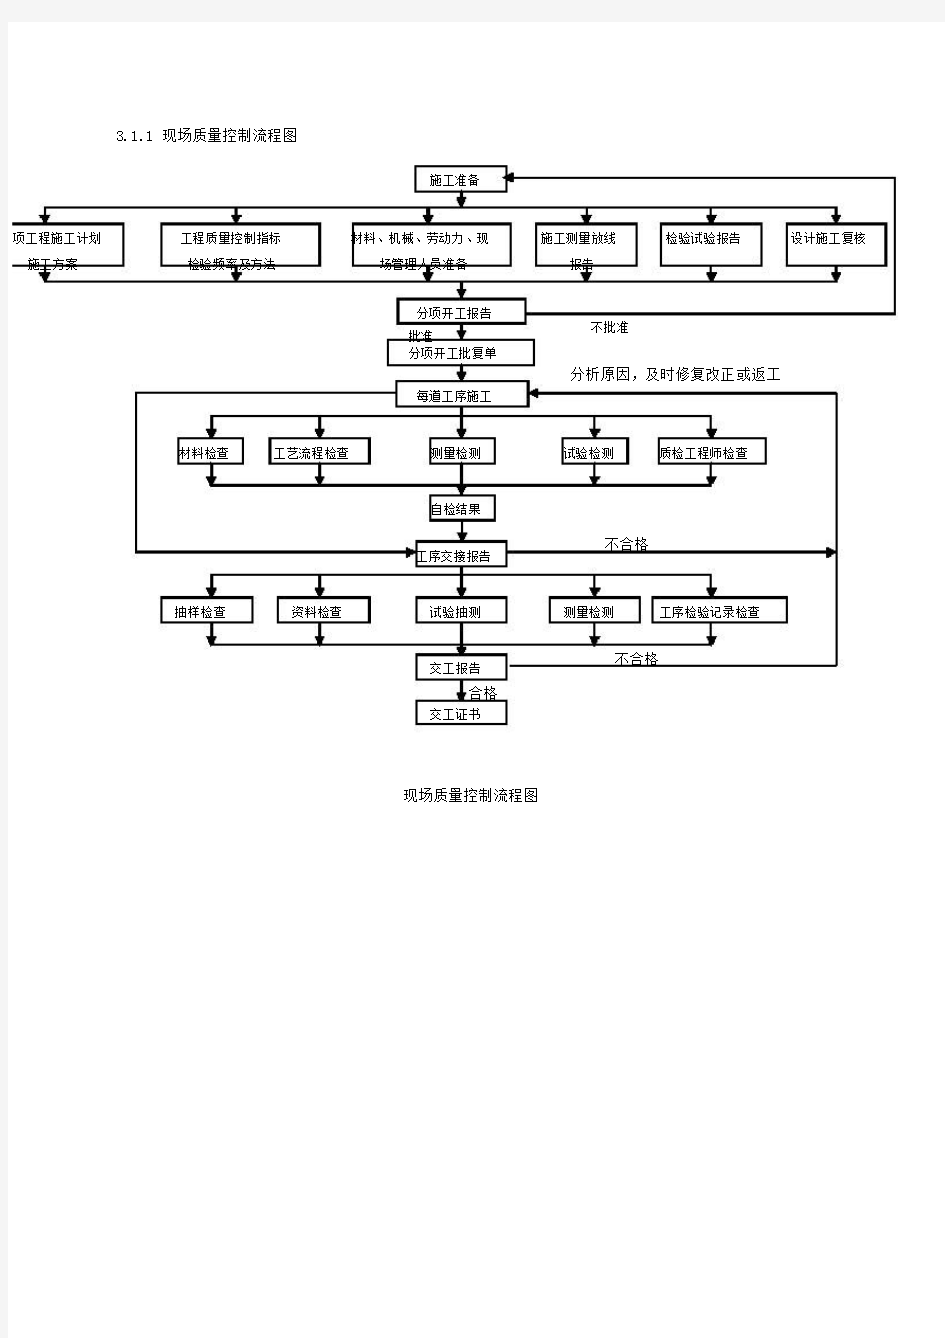 【通用】质量控制流程图.doc